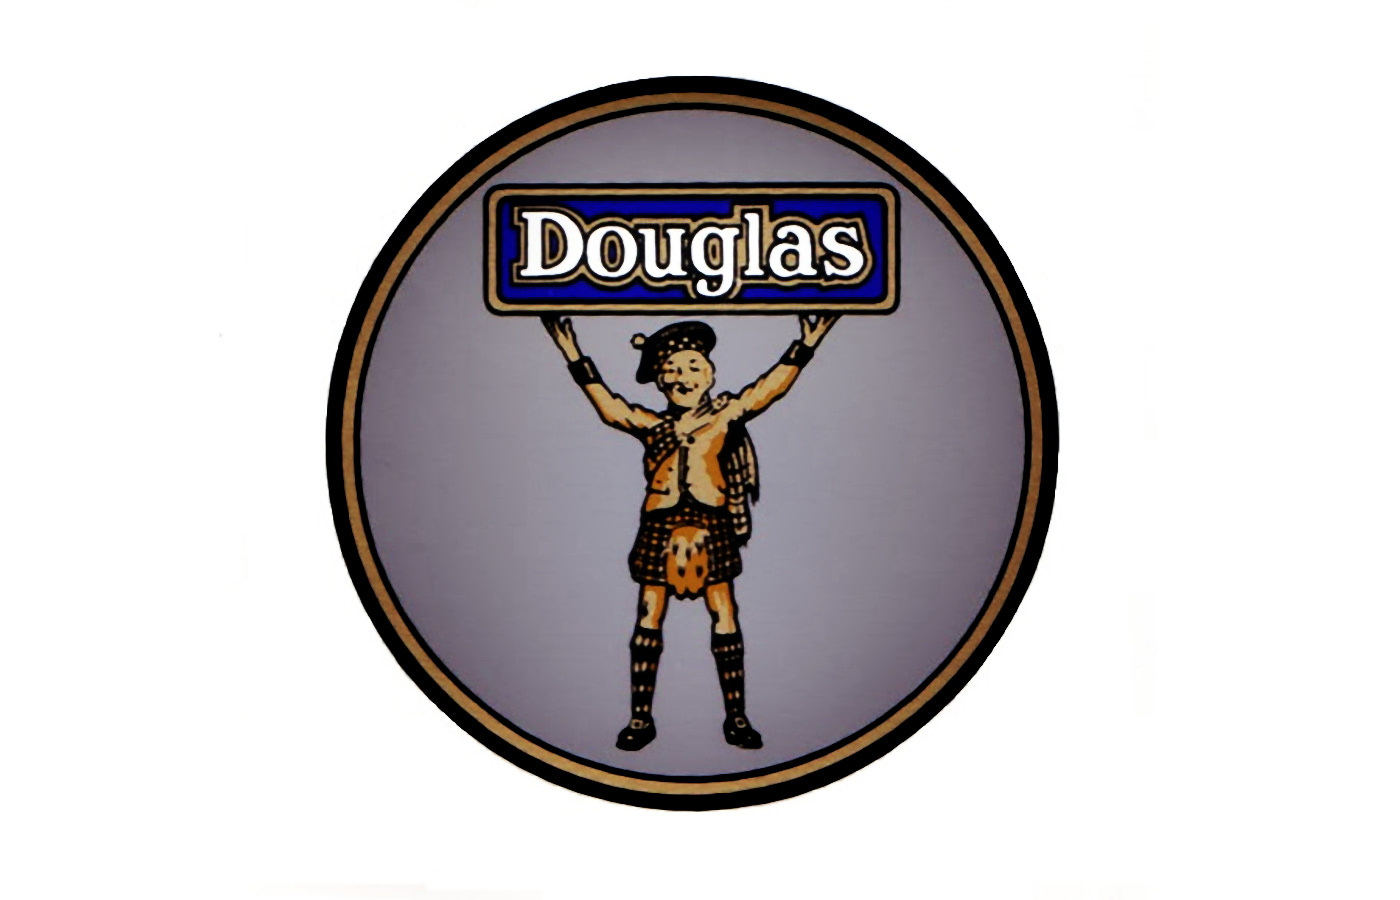 Douglas emblem